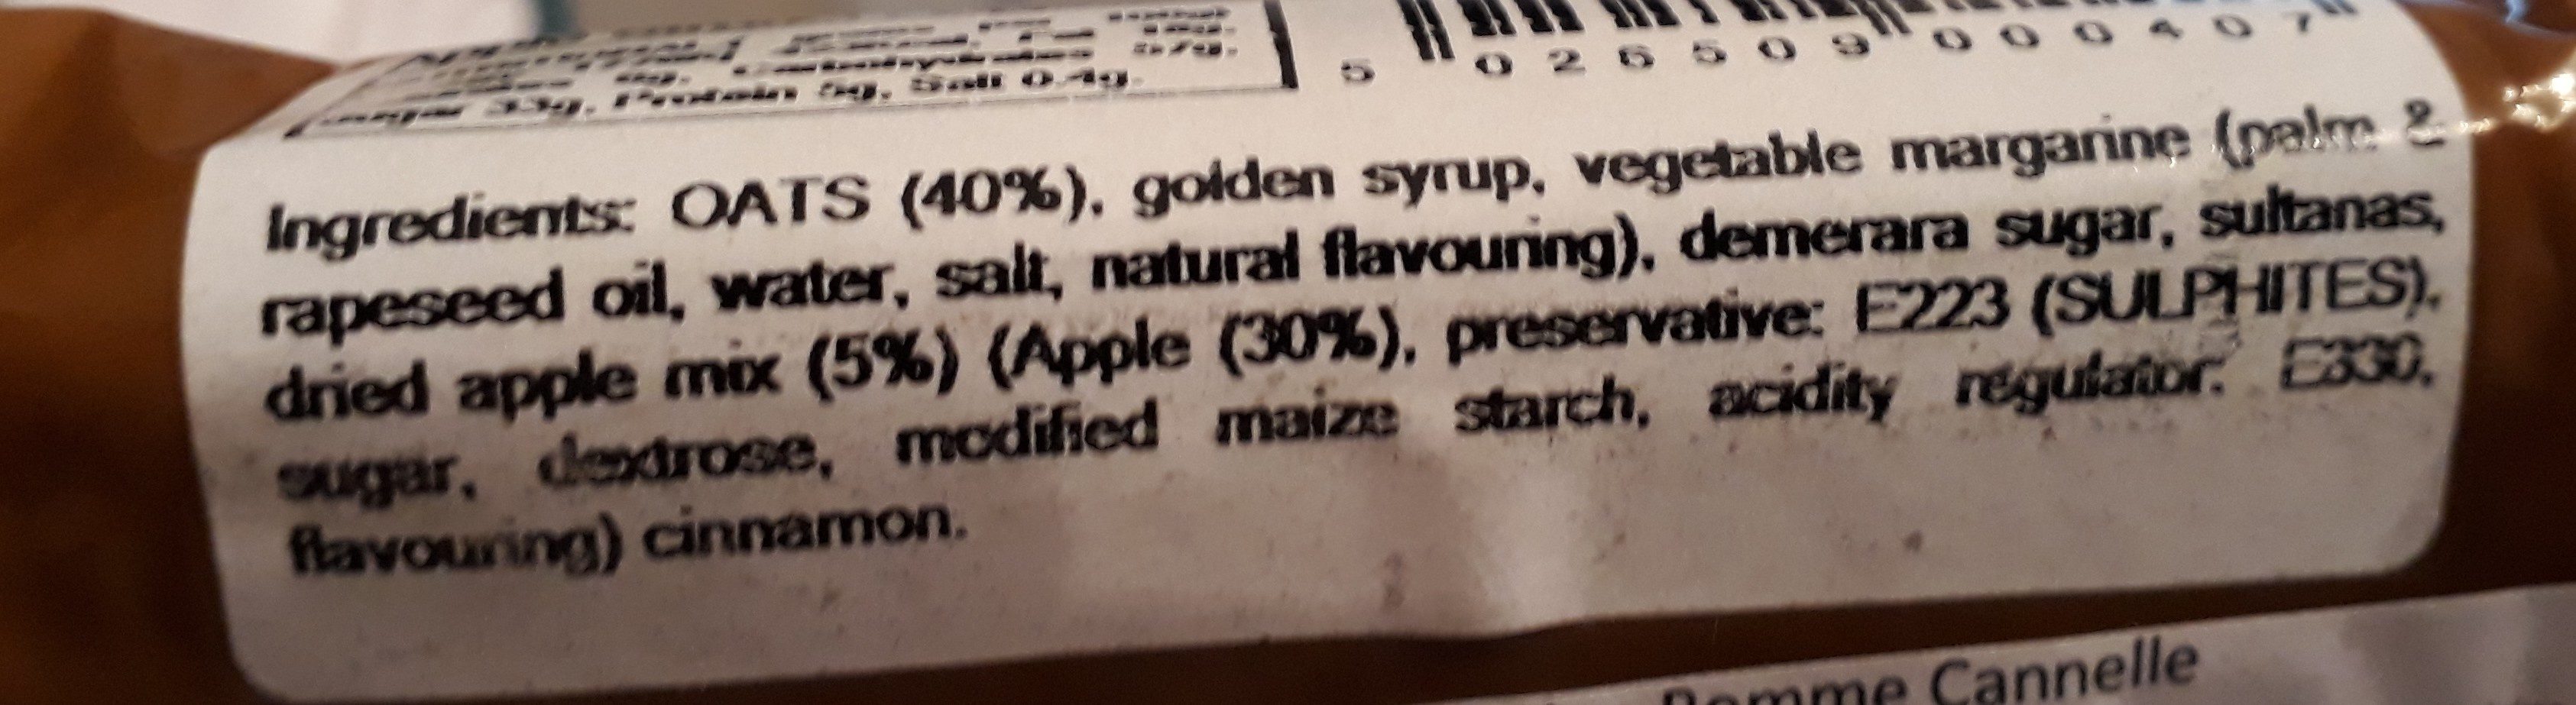 Apple Strudel Flapjacks (pack of ) - Ingredients - fr